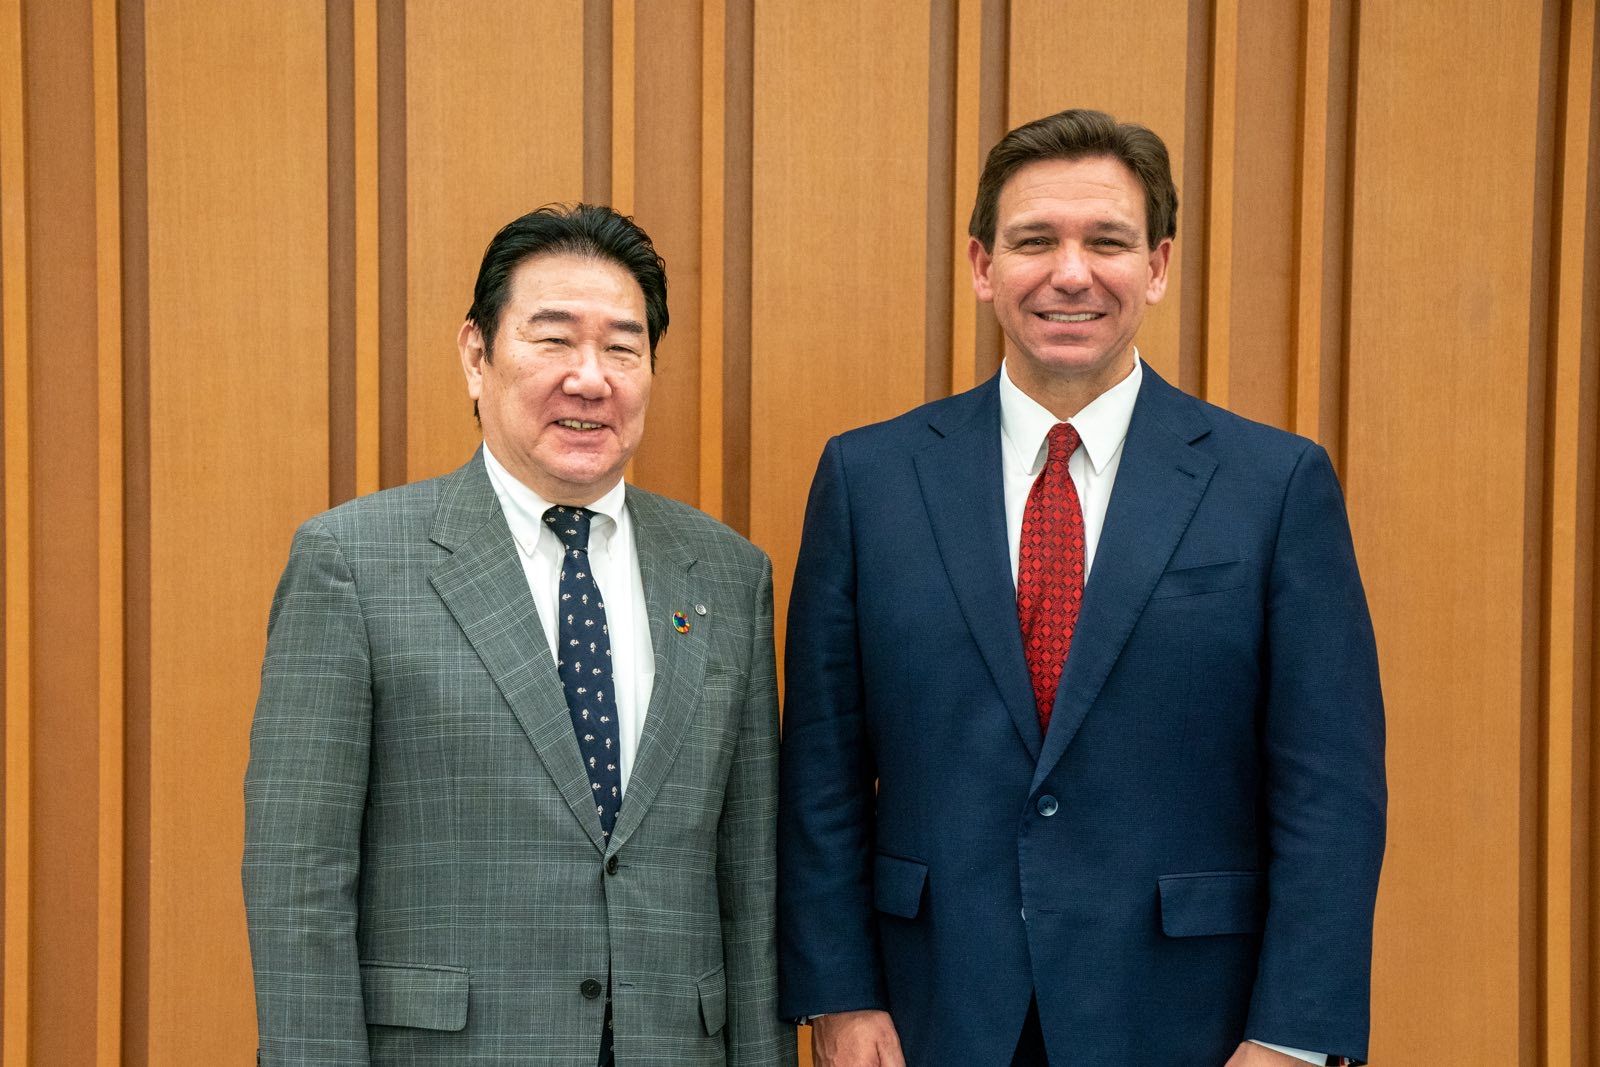 Governor of Florida Ron DeSantis and JAL Executive Director Ueki Yoshiharu